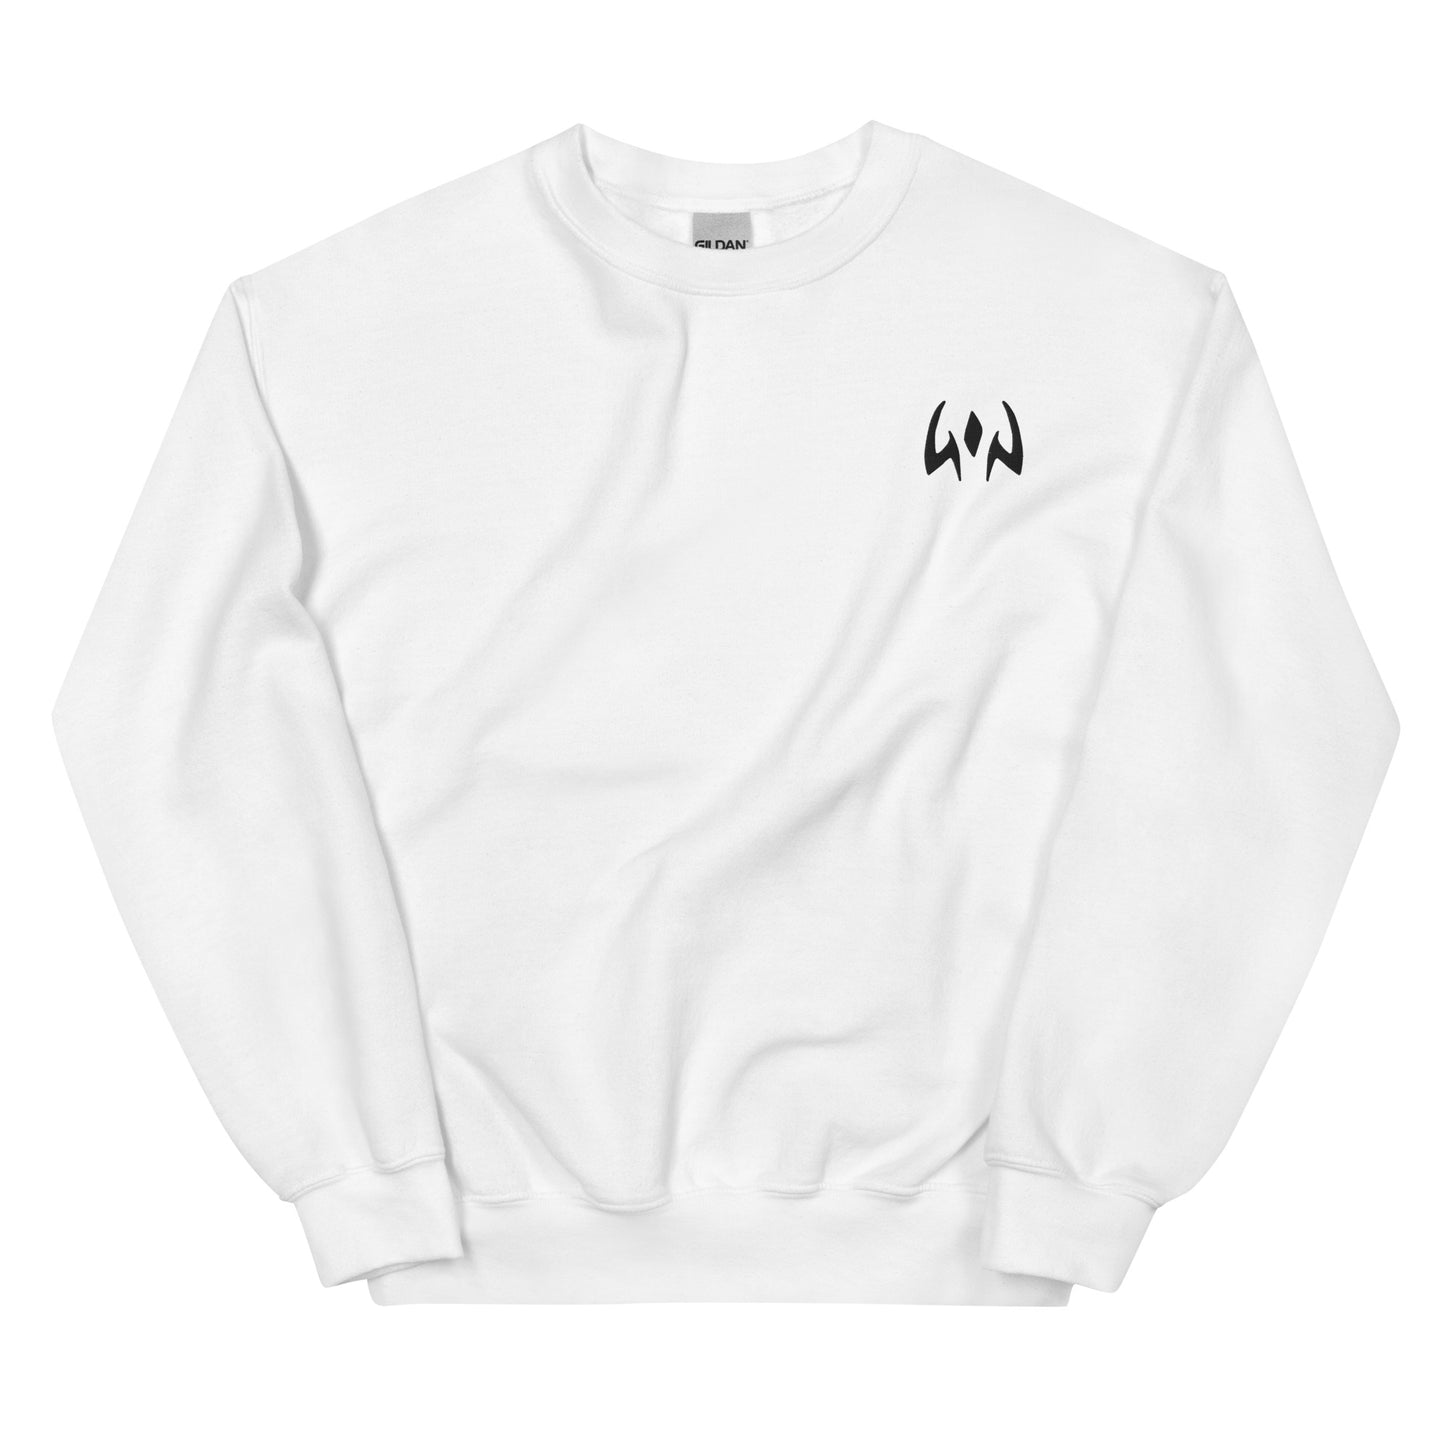 Curse marks sweater Sweatshirt jumper Embroidered